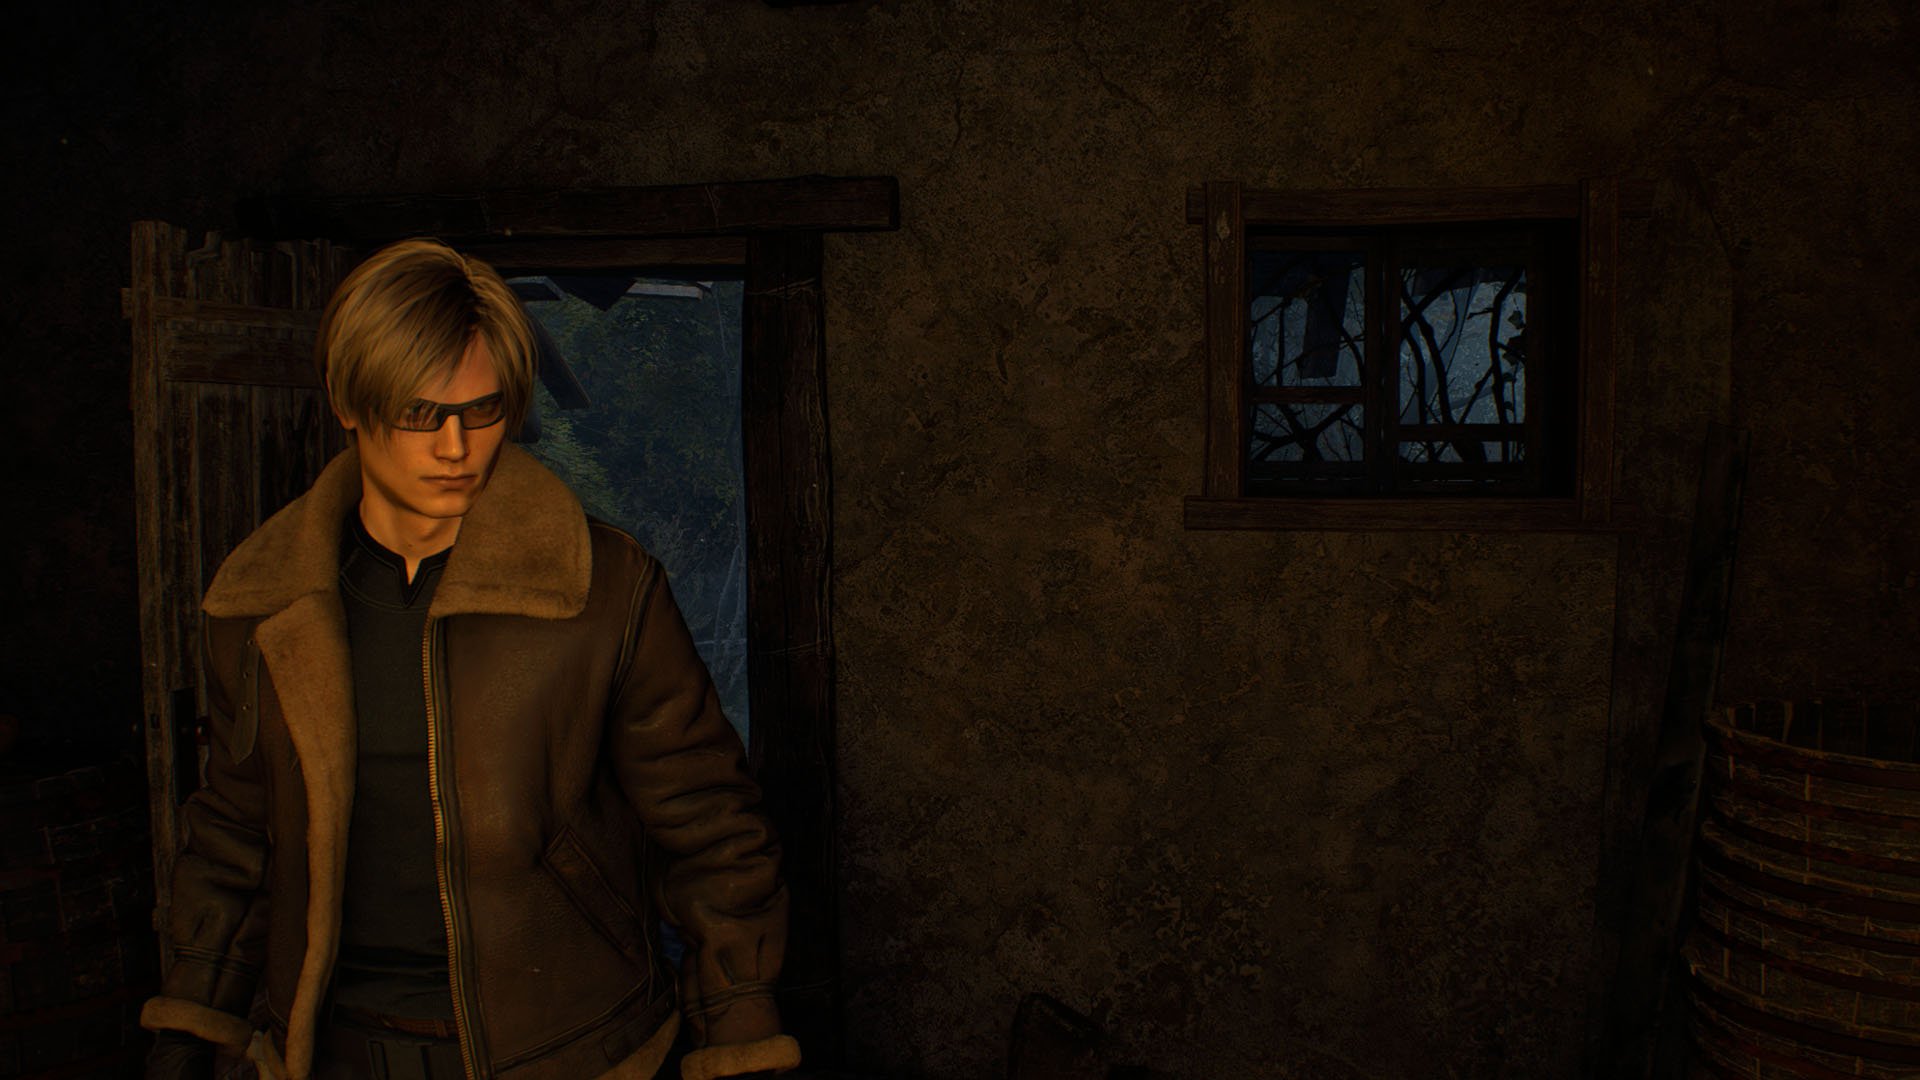 Скриншот 1 к игре Resident Evil 4 Remake [v 1.0 build 11025382 + DLC] PC | RePack от Decepticon